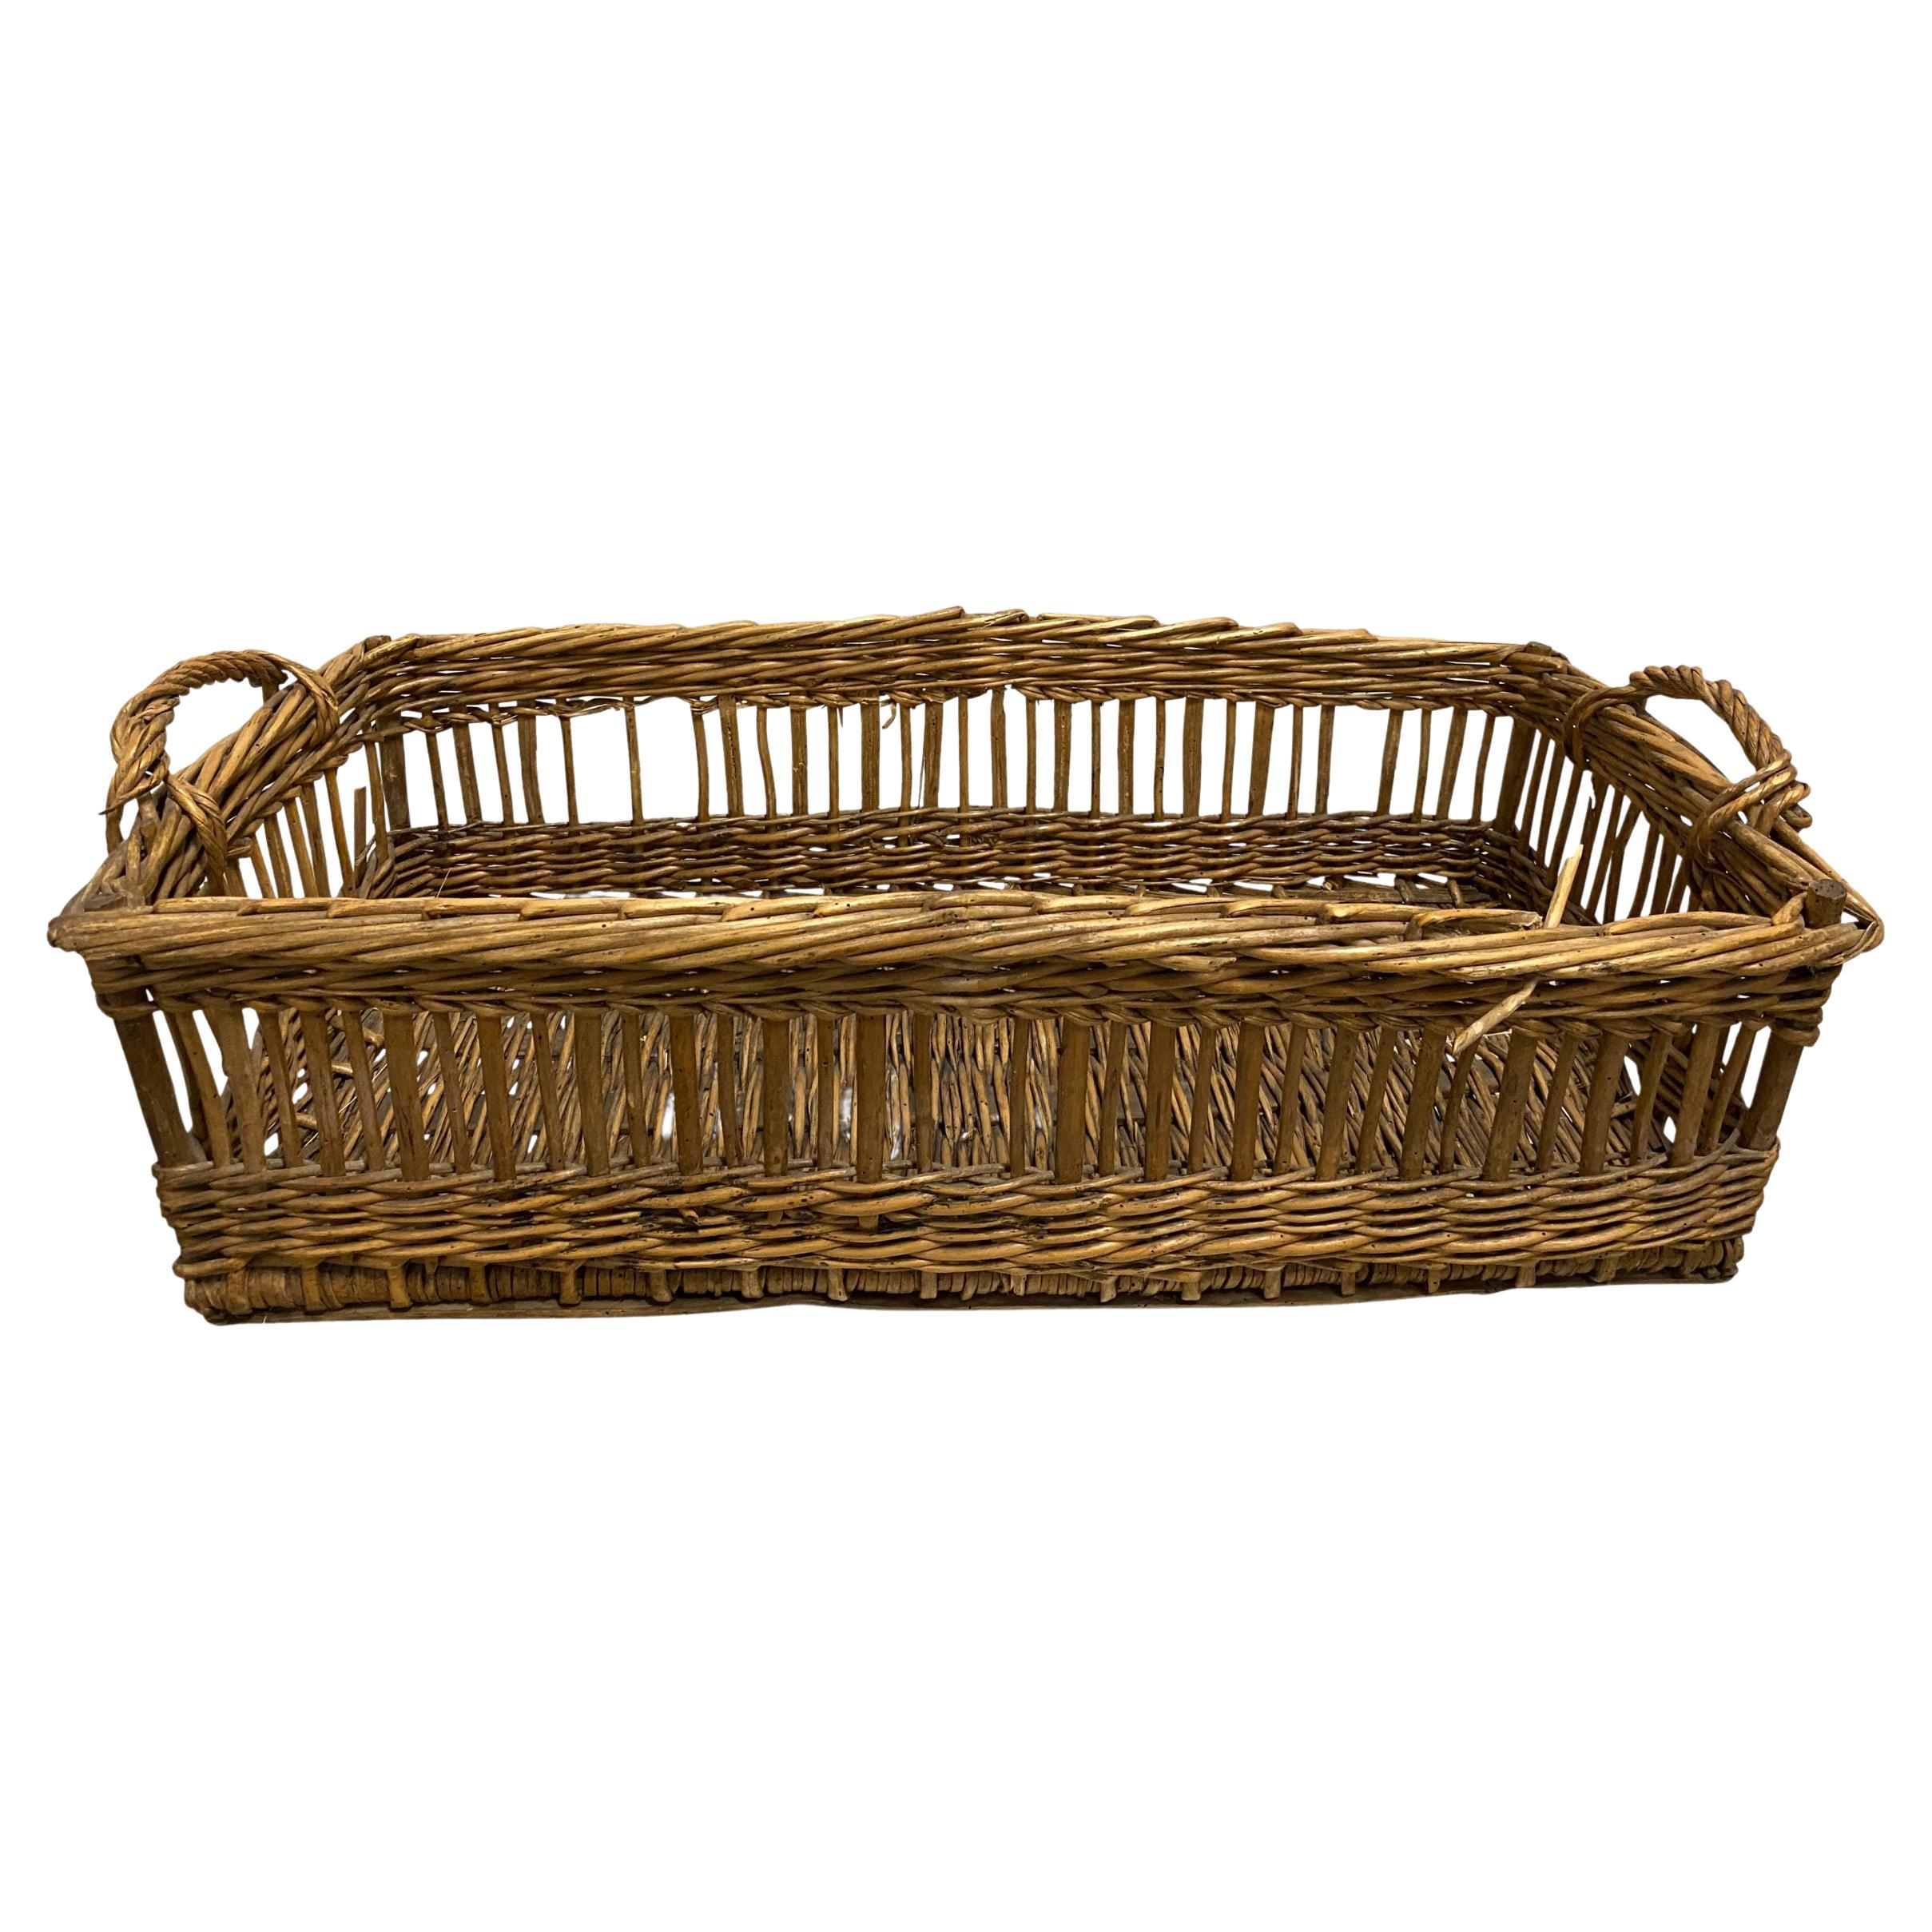 Antique Wicker Gathering Basket